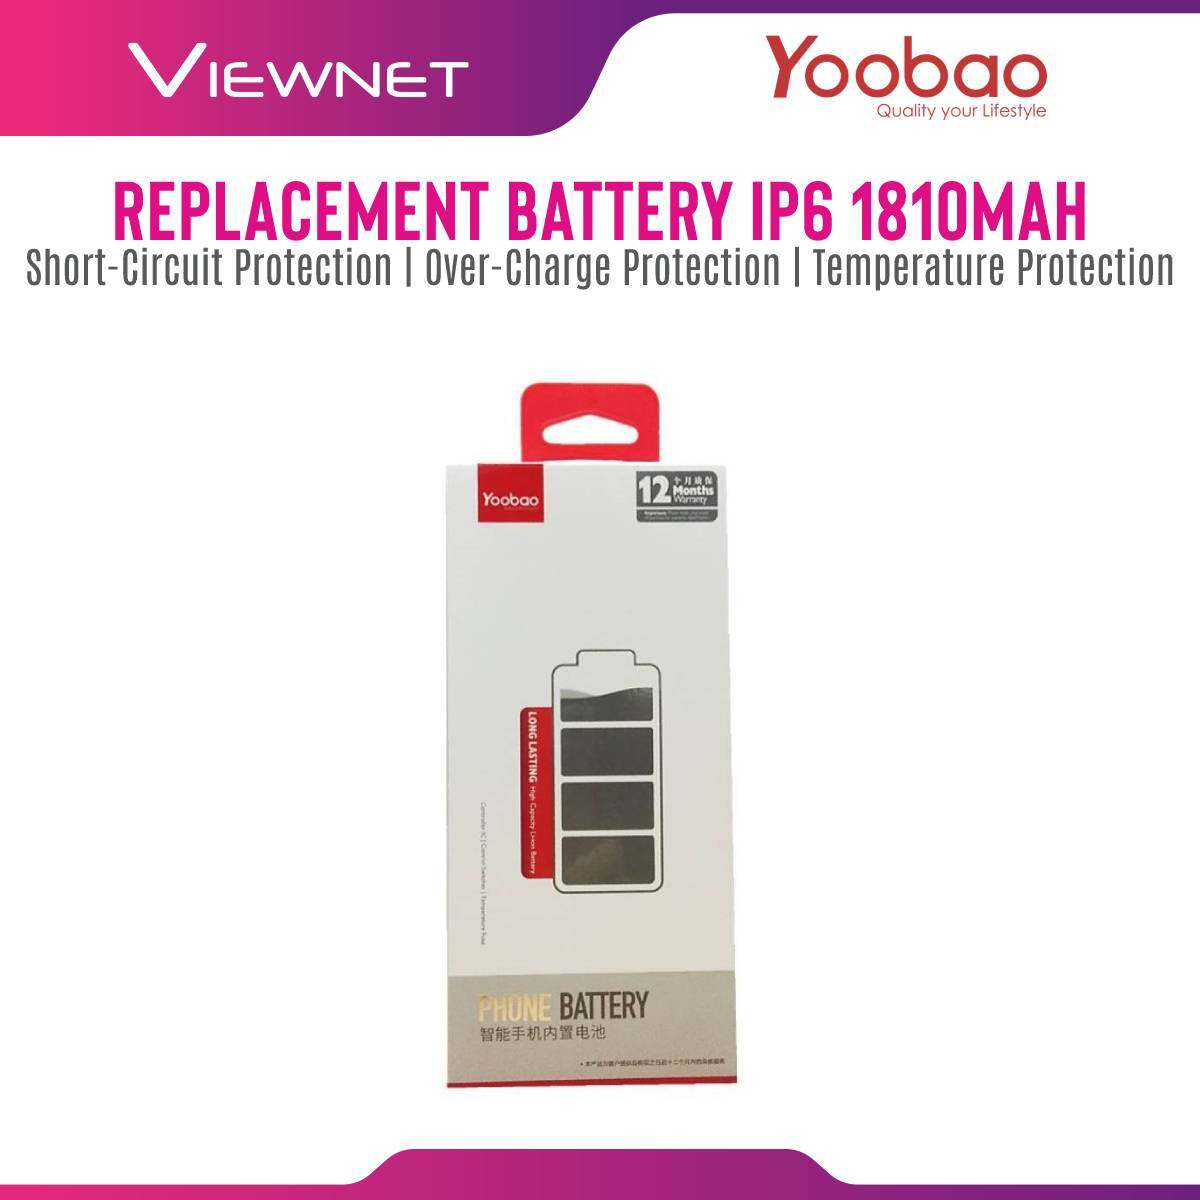 Yoobao Iphone 6 [1810mAh] 3.8V Replacement Standard Battery